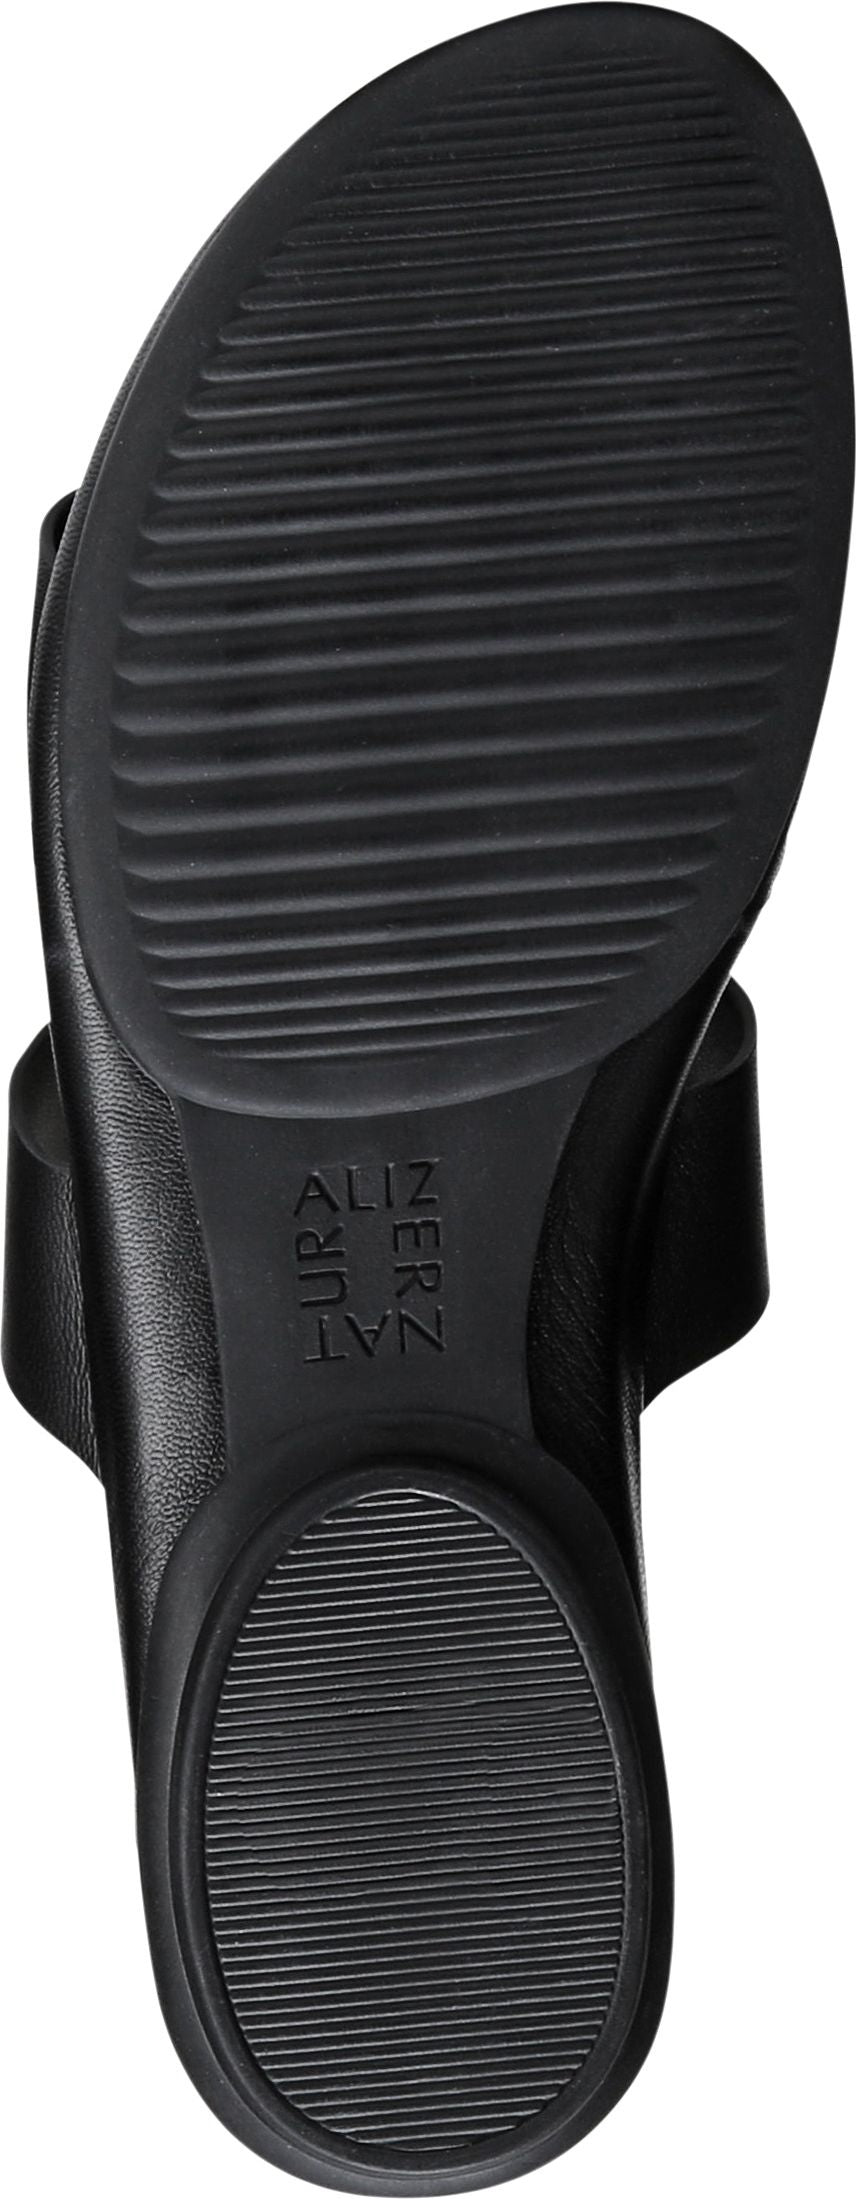 Naturalizer Sandals Genn Drift Black Leather - Wide